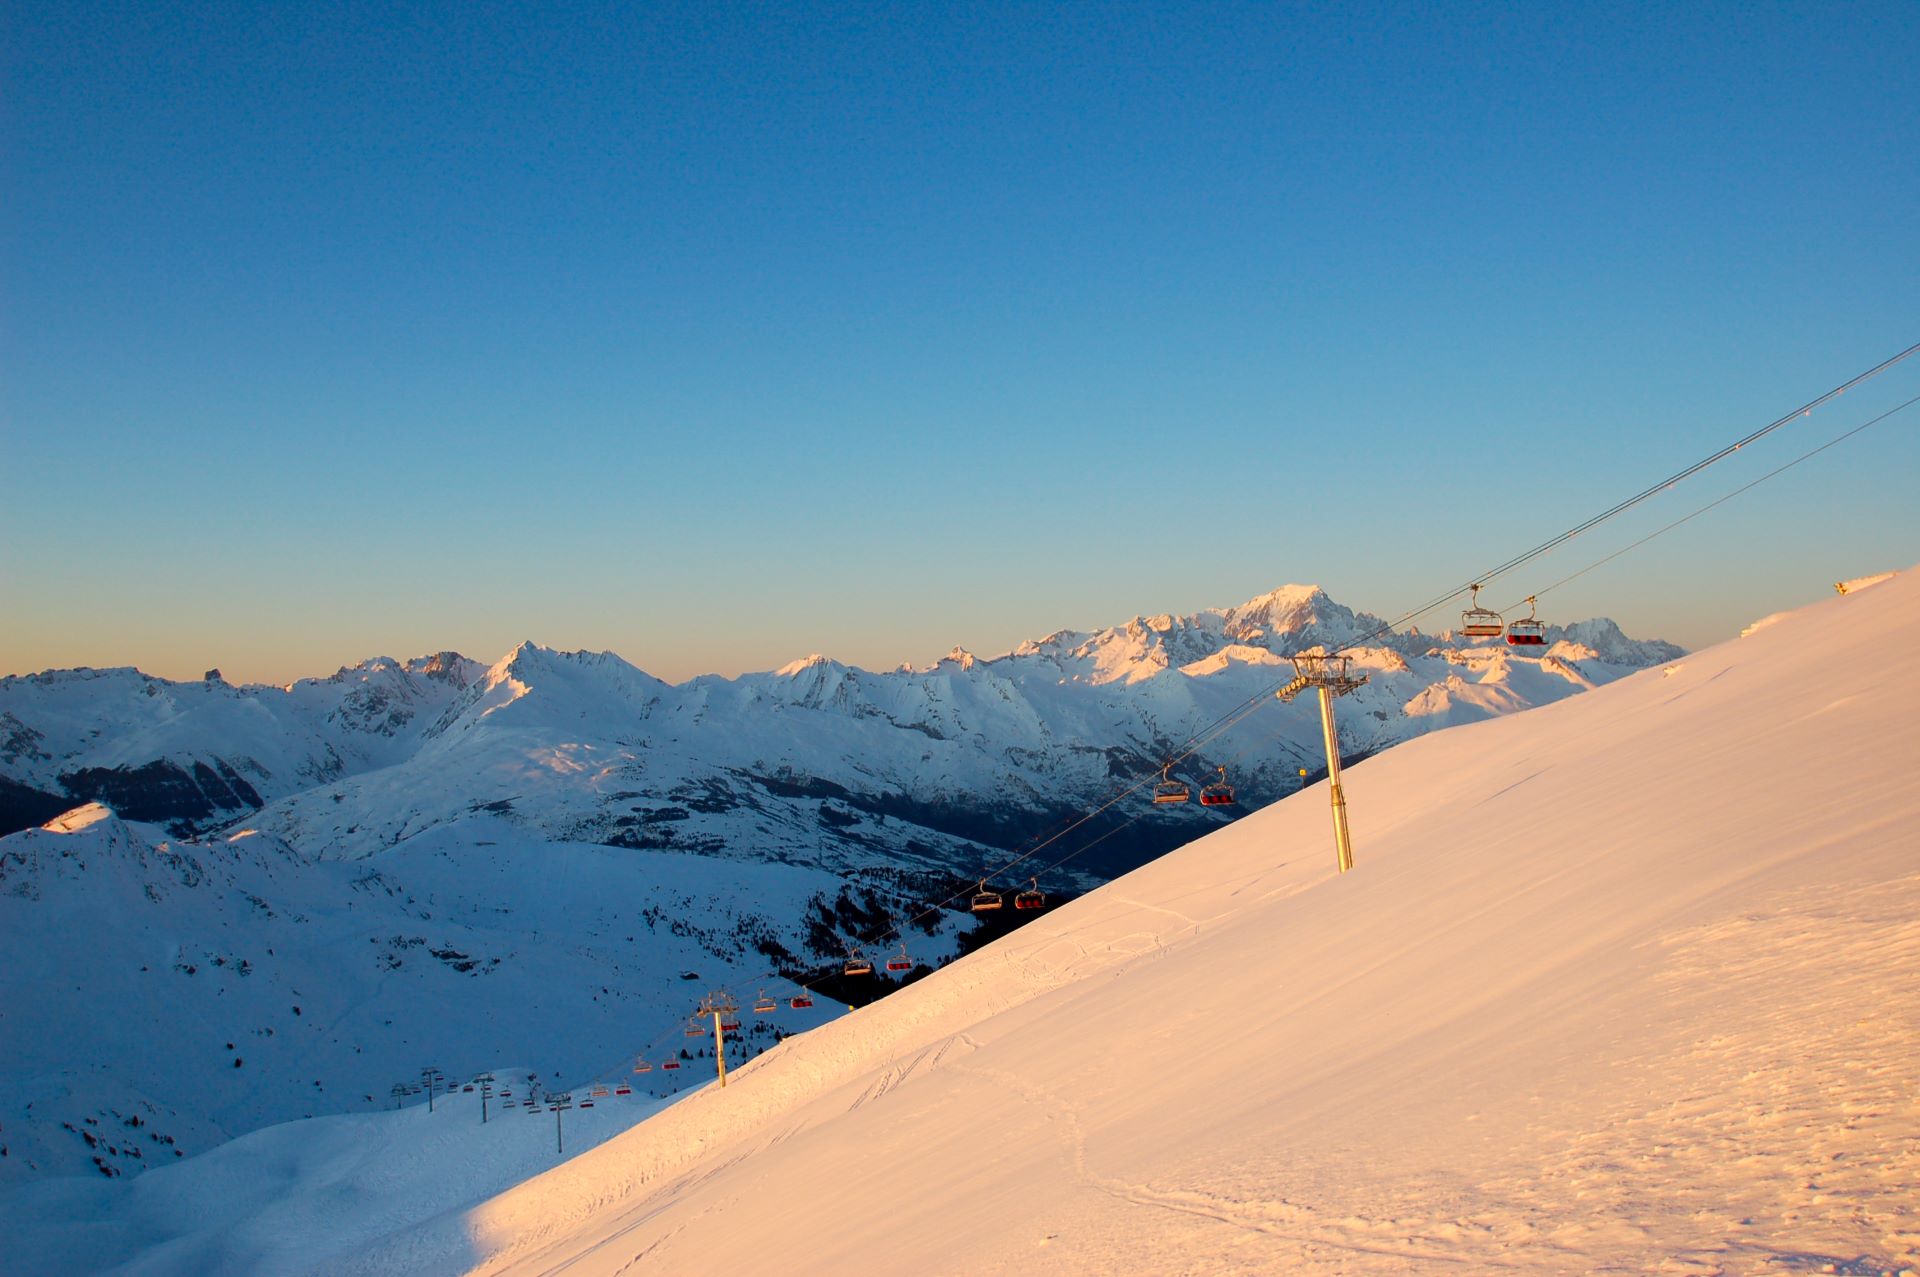 Soirée-moonlight-experience-montagne-station-de-ski-alpes-oxygene-ski-collection 